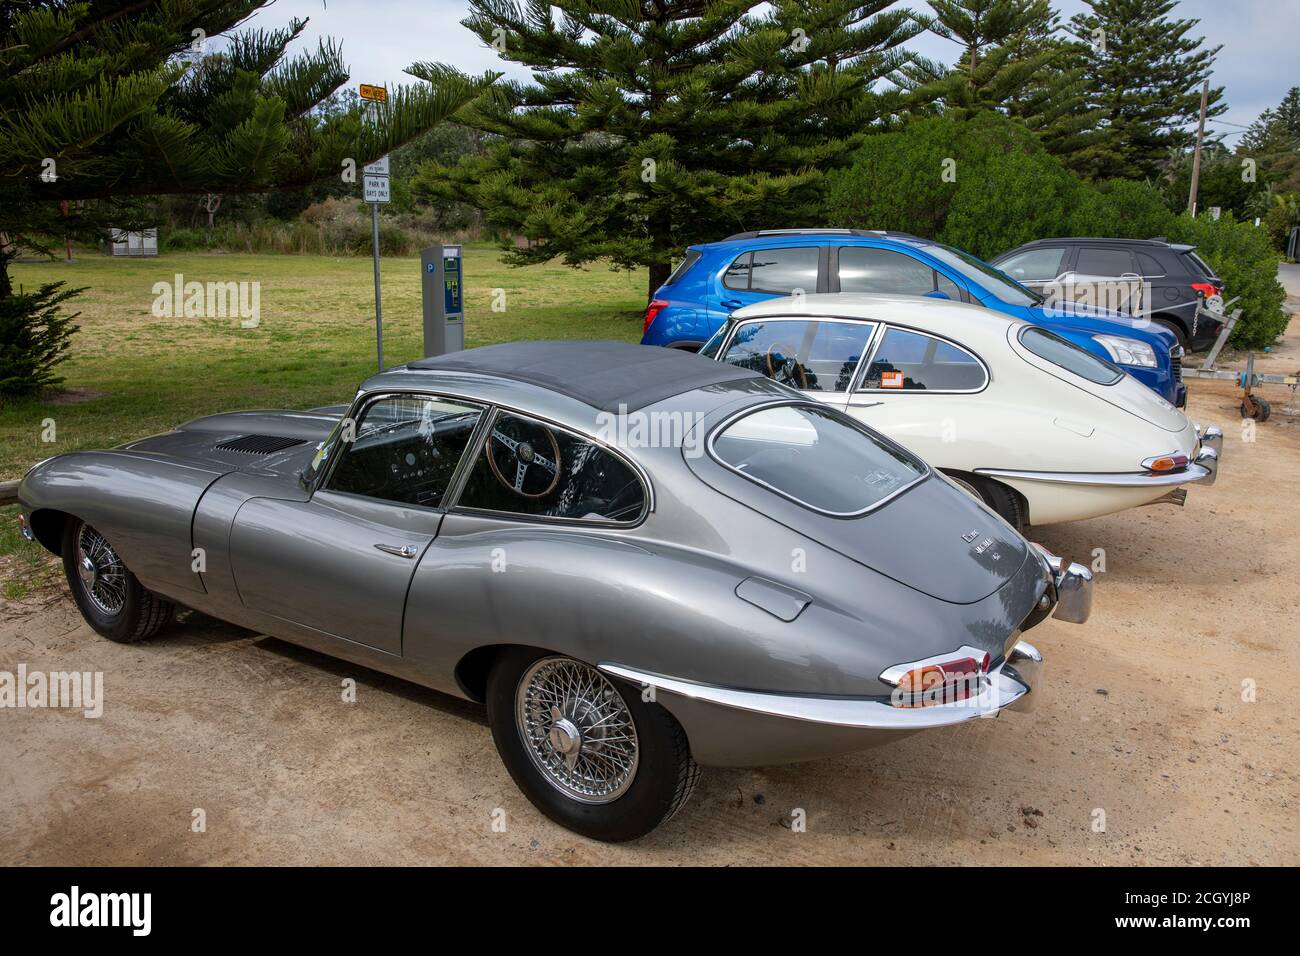 Two classic jaguar e type cars at palm beach,Sydney,Australia Stock Photo